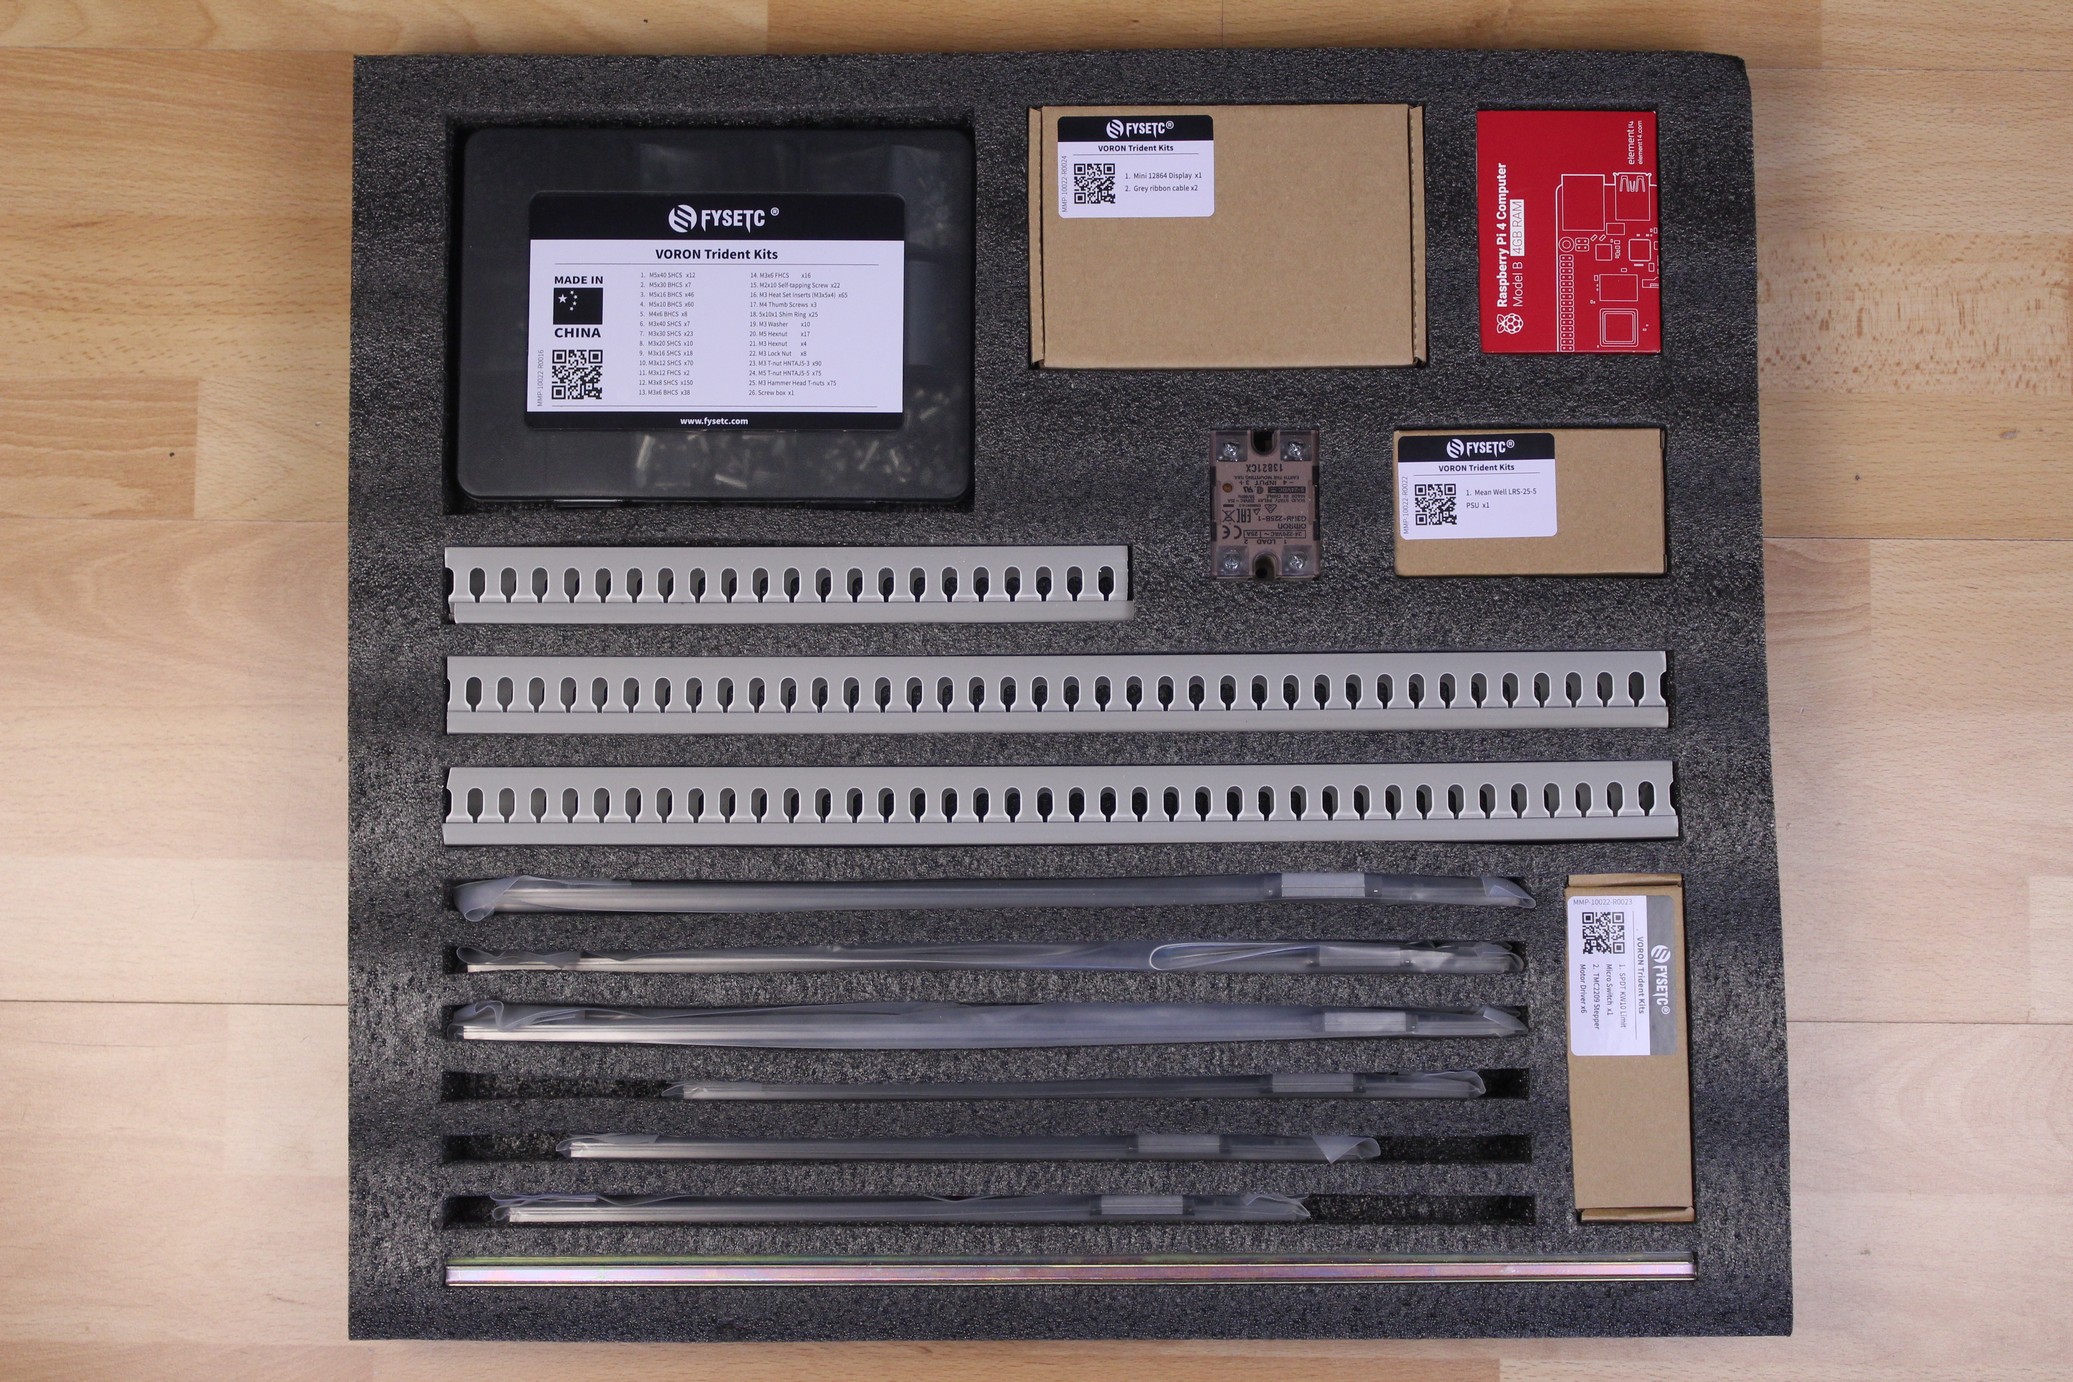 FYSETC Voron Trident Kit Review Packaging 4 | VORON Trident FYSETC Kit Review: Is it worth it?